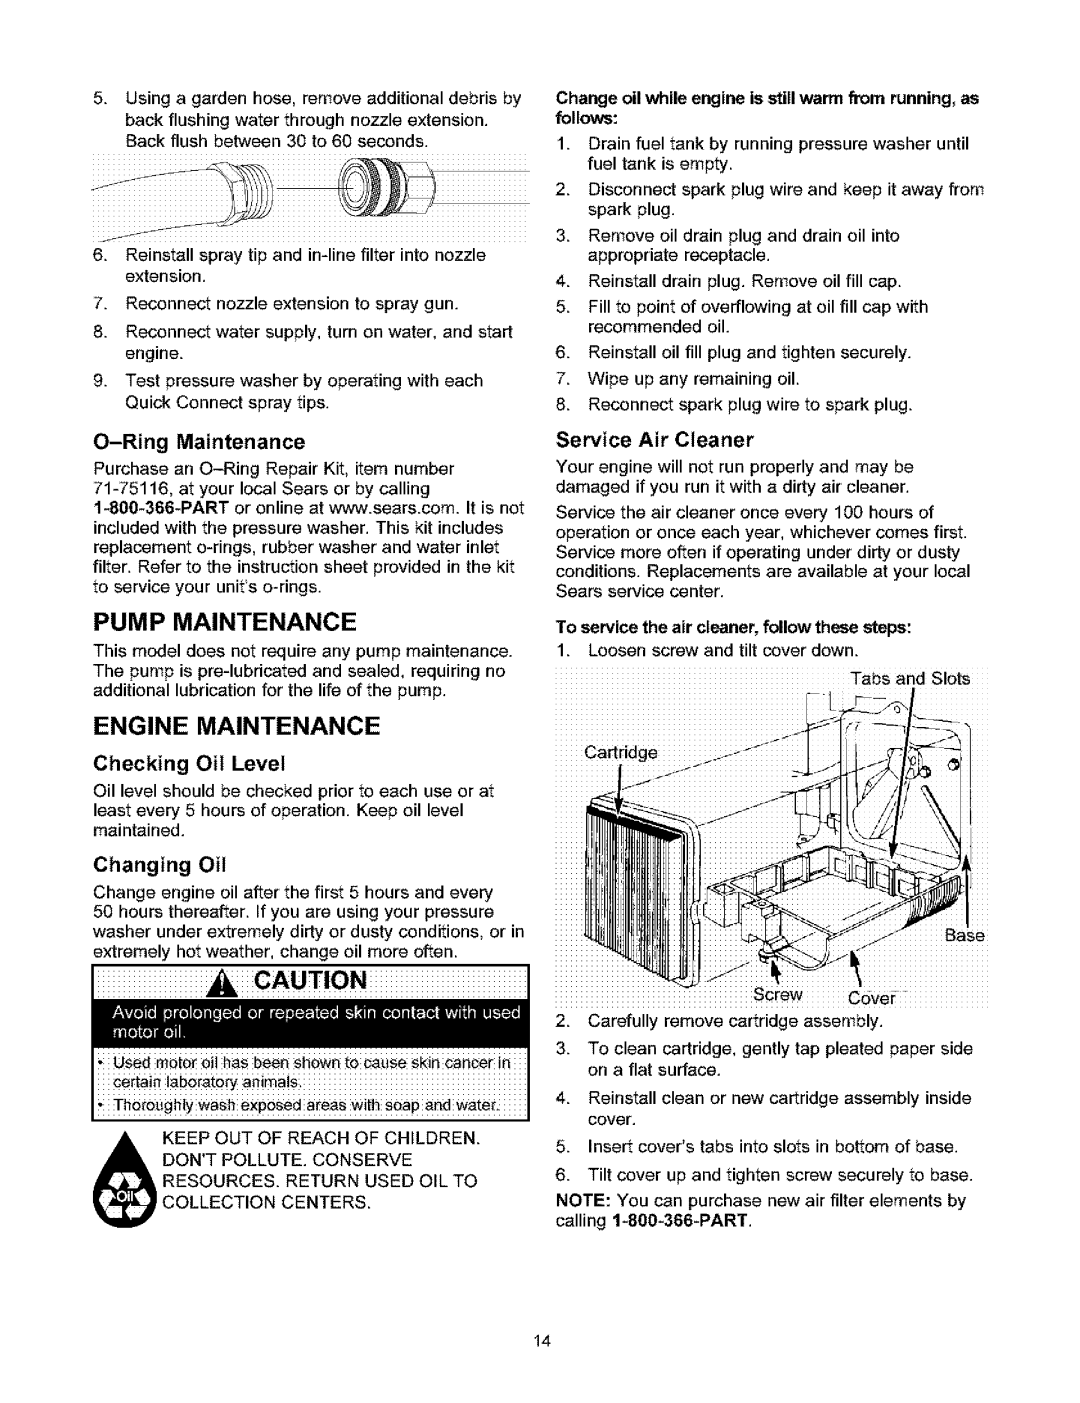 Craftsman 580.753 manual Pump Maintenance, Engine Maintenance, Service Air Cleaner, Changing Oil, O-Ring Maintenance 